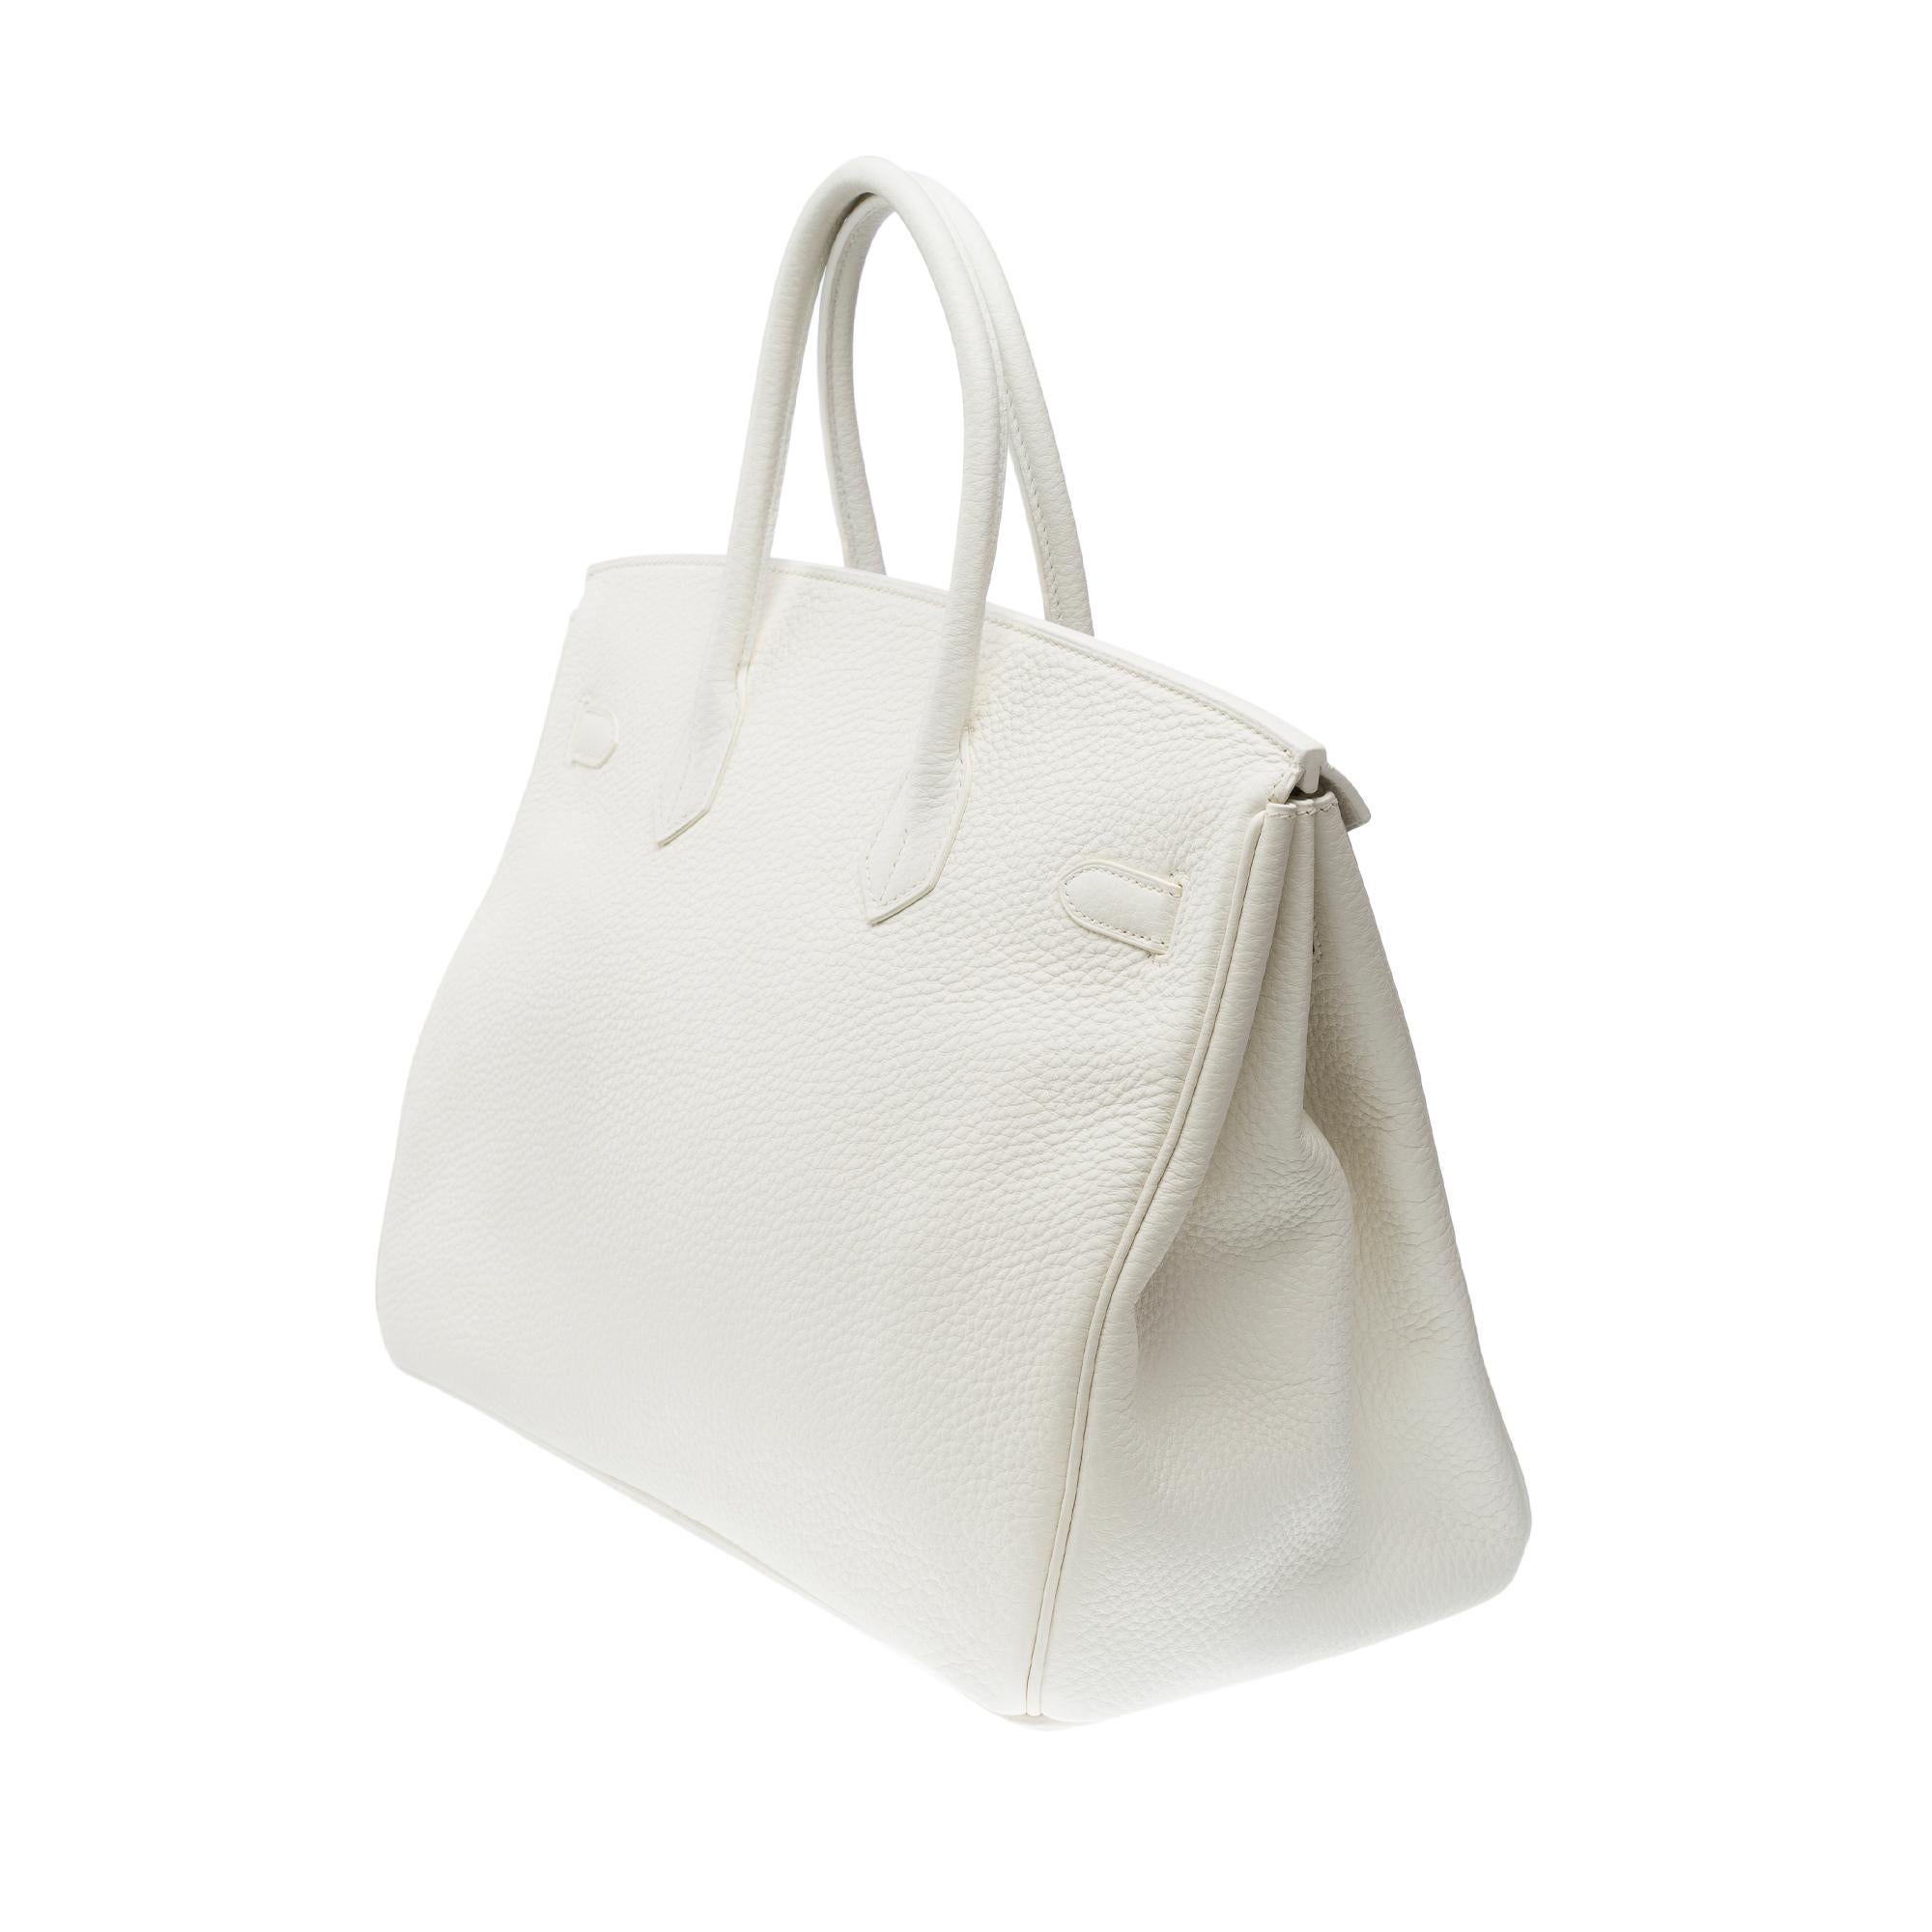 Stunning Hermès Birkin 35 handbag in White Taurillon Clemence leather, GHW 1